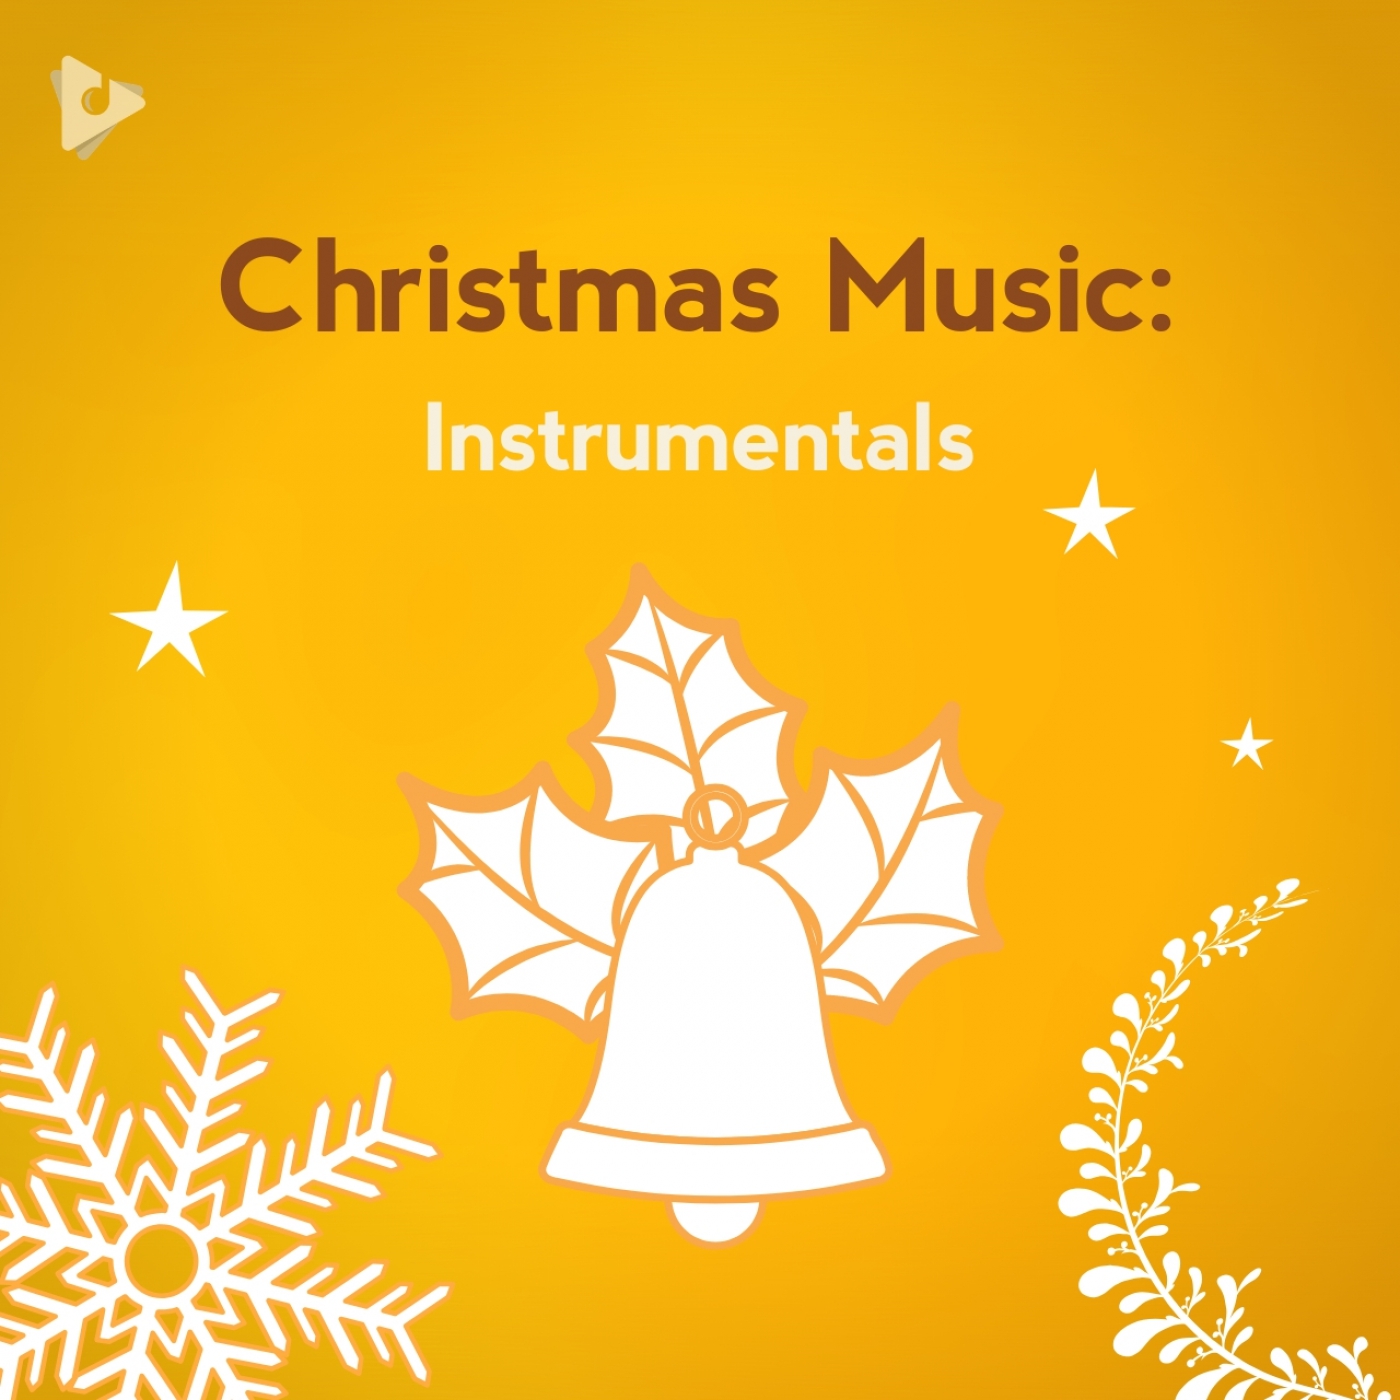 Christmas Music: Instrumentals